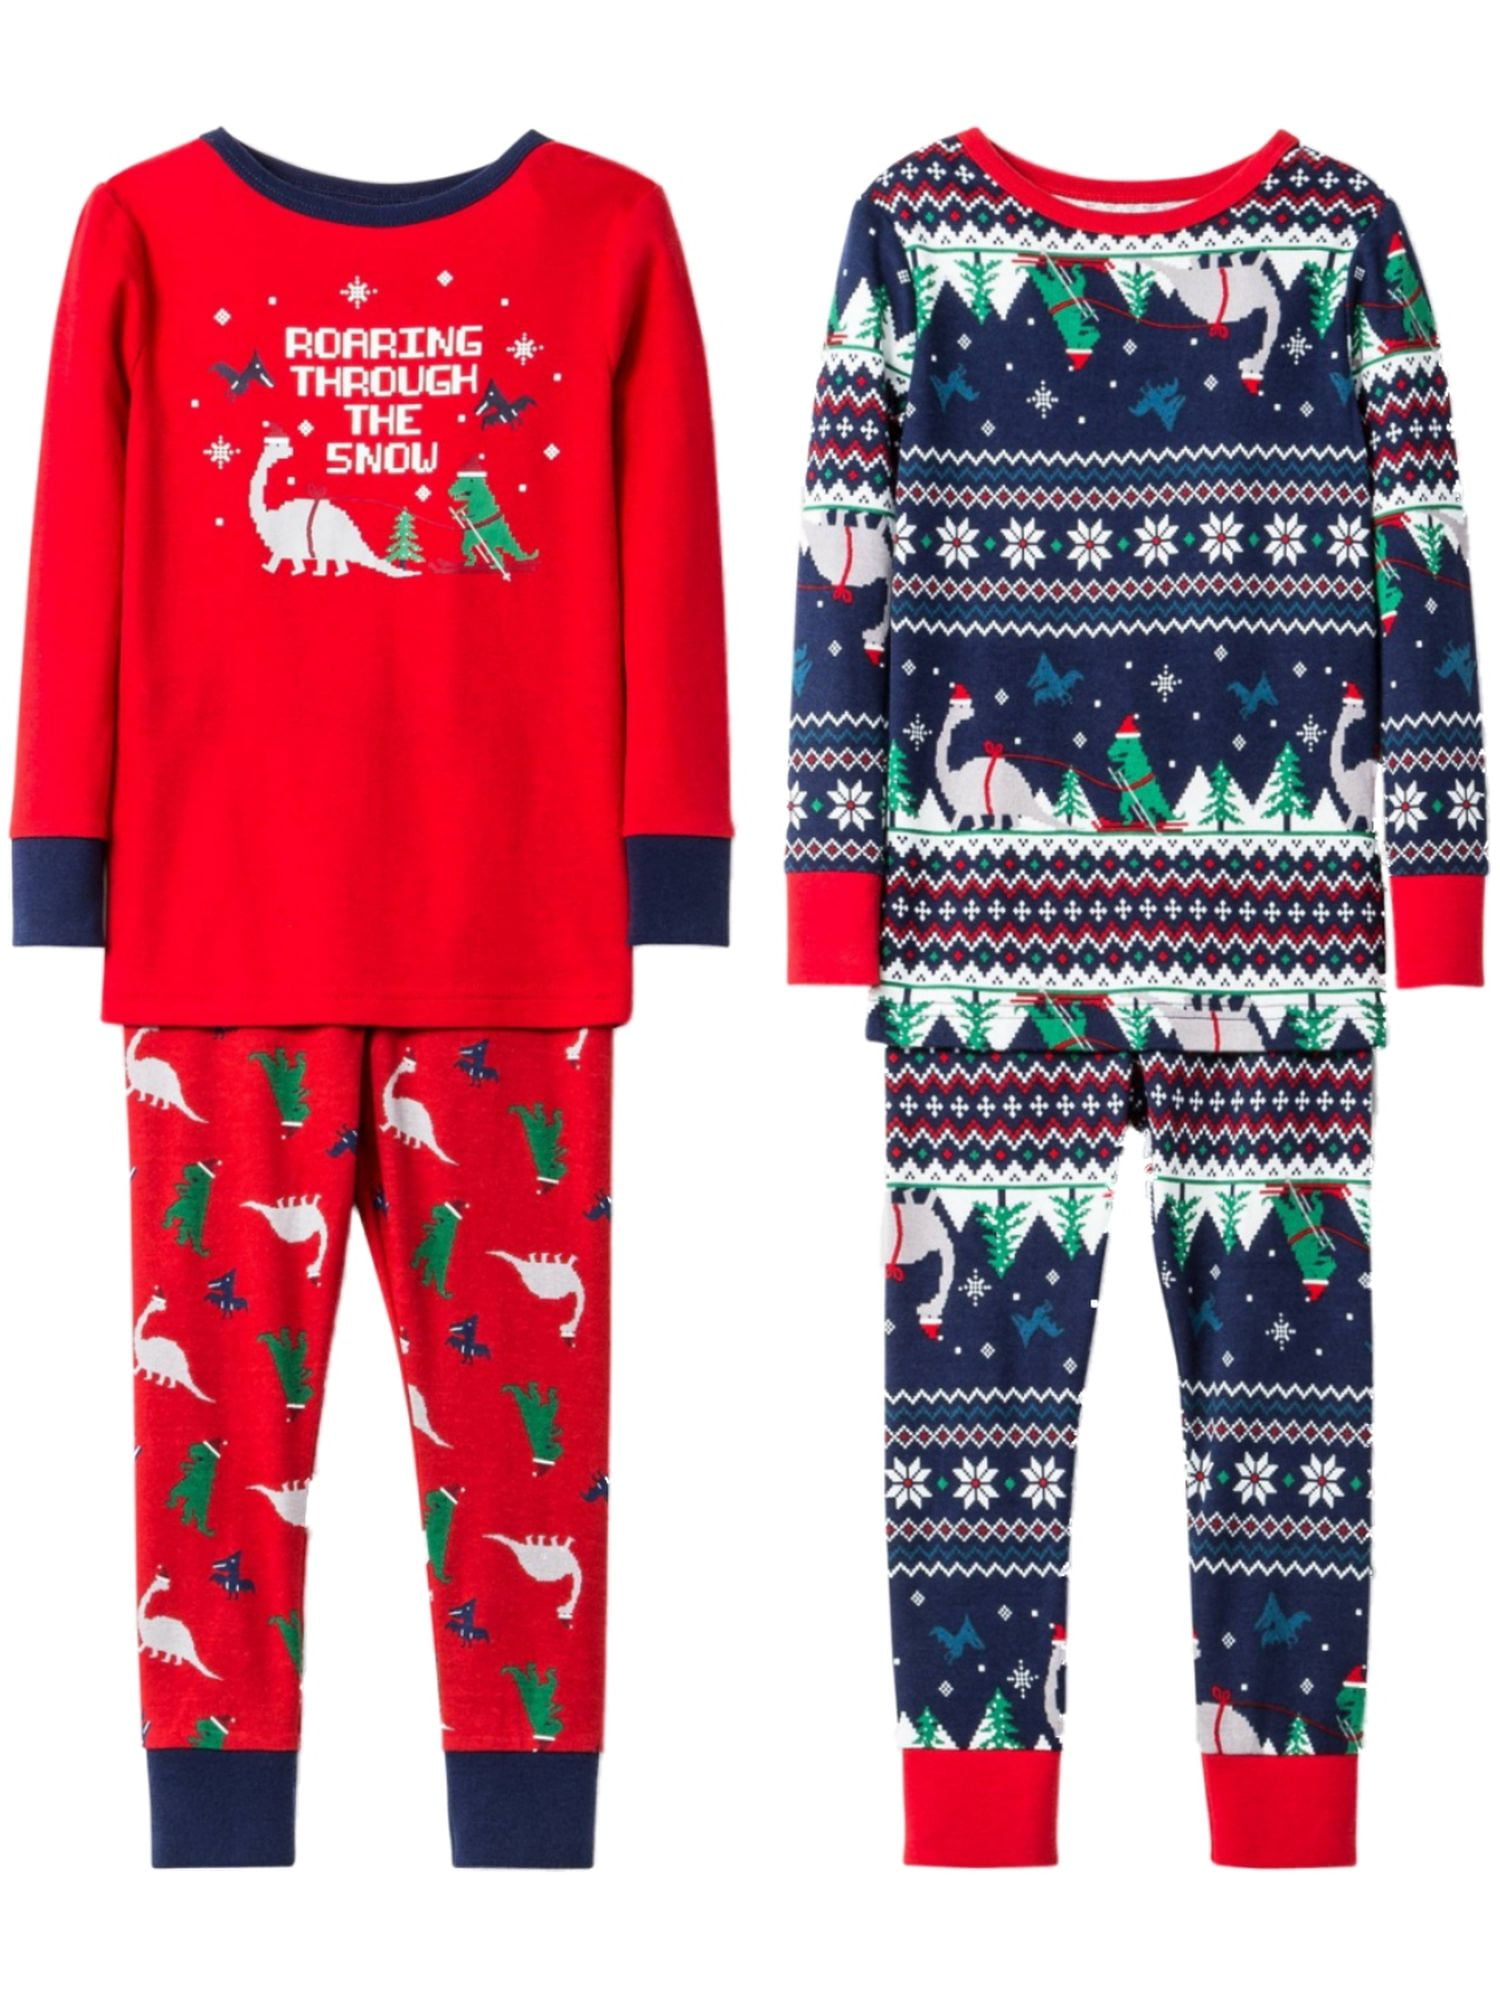 Little Boys Girls Christmas Pajamas Dinosaurs Cars Trees Pjs Kids Gift Set